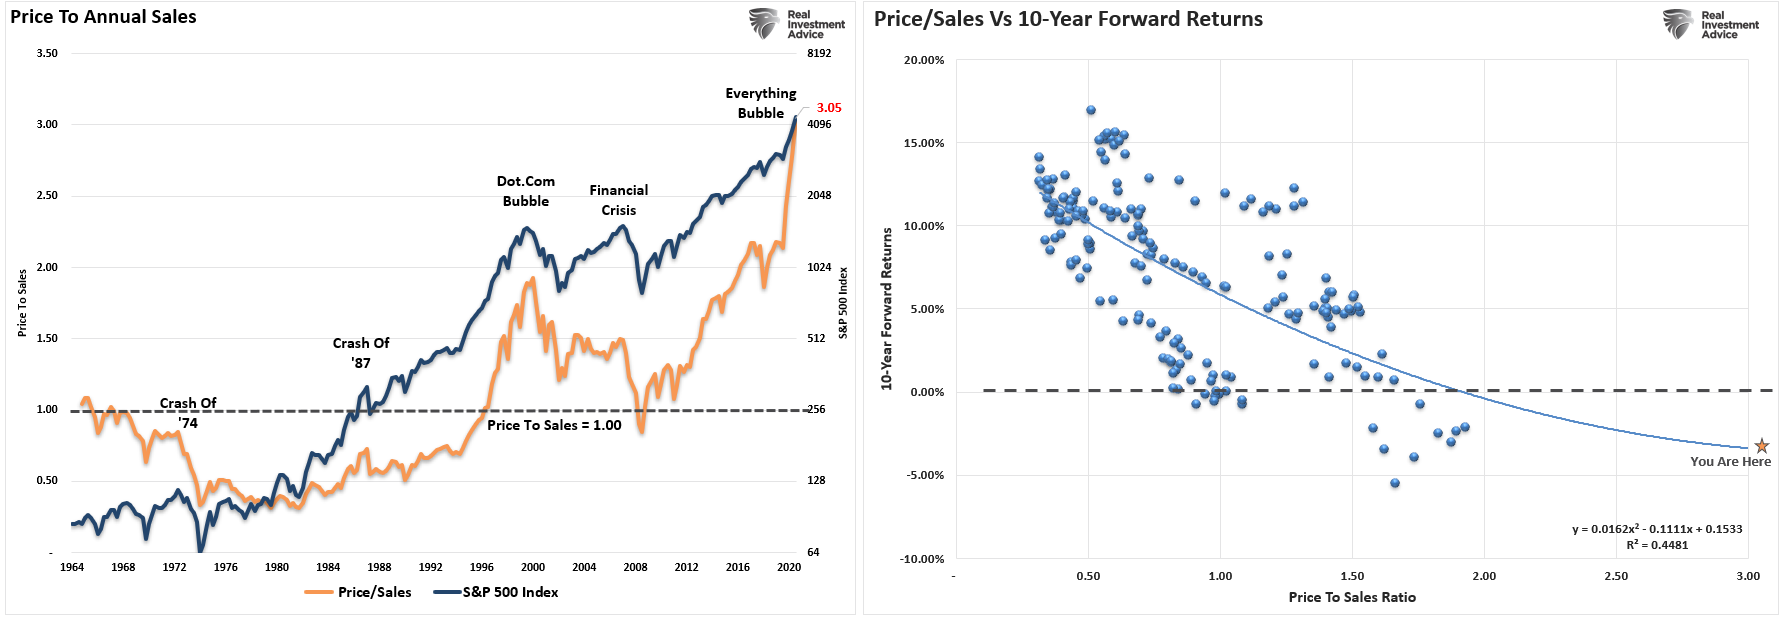 Price Sales To Forward Returns